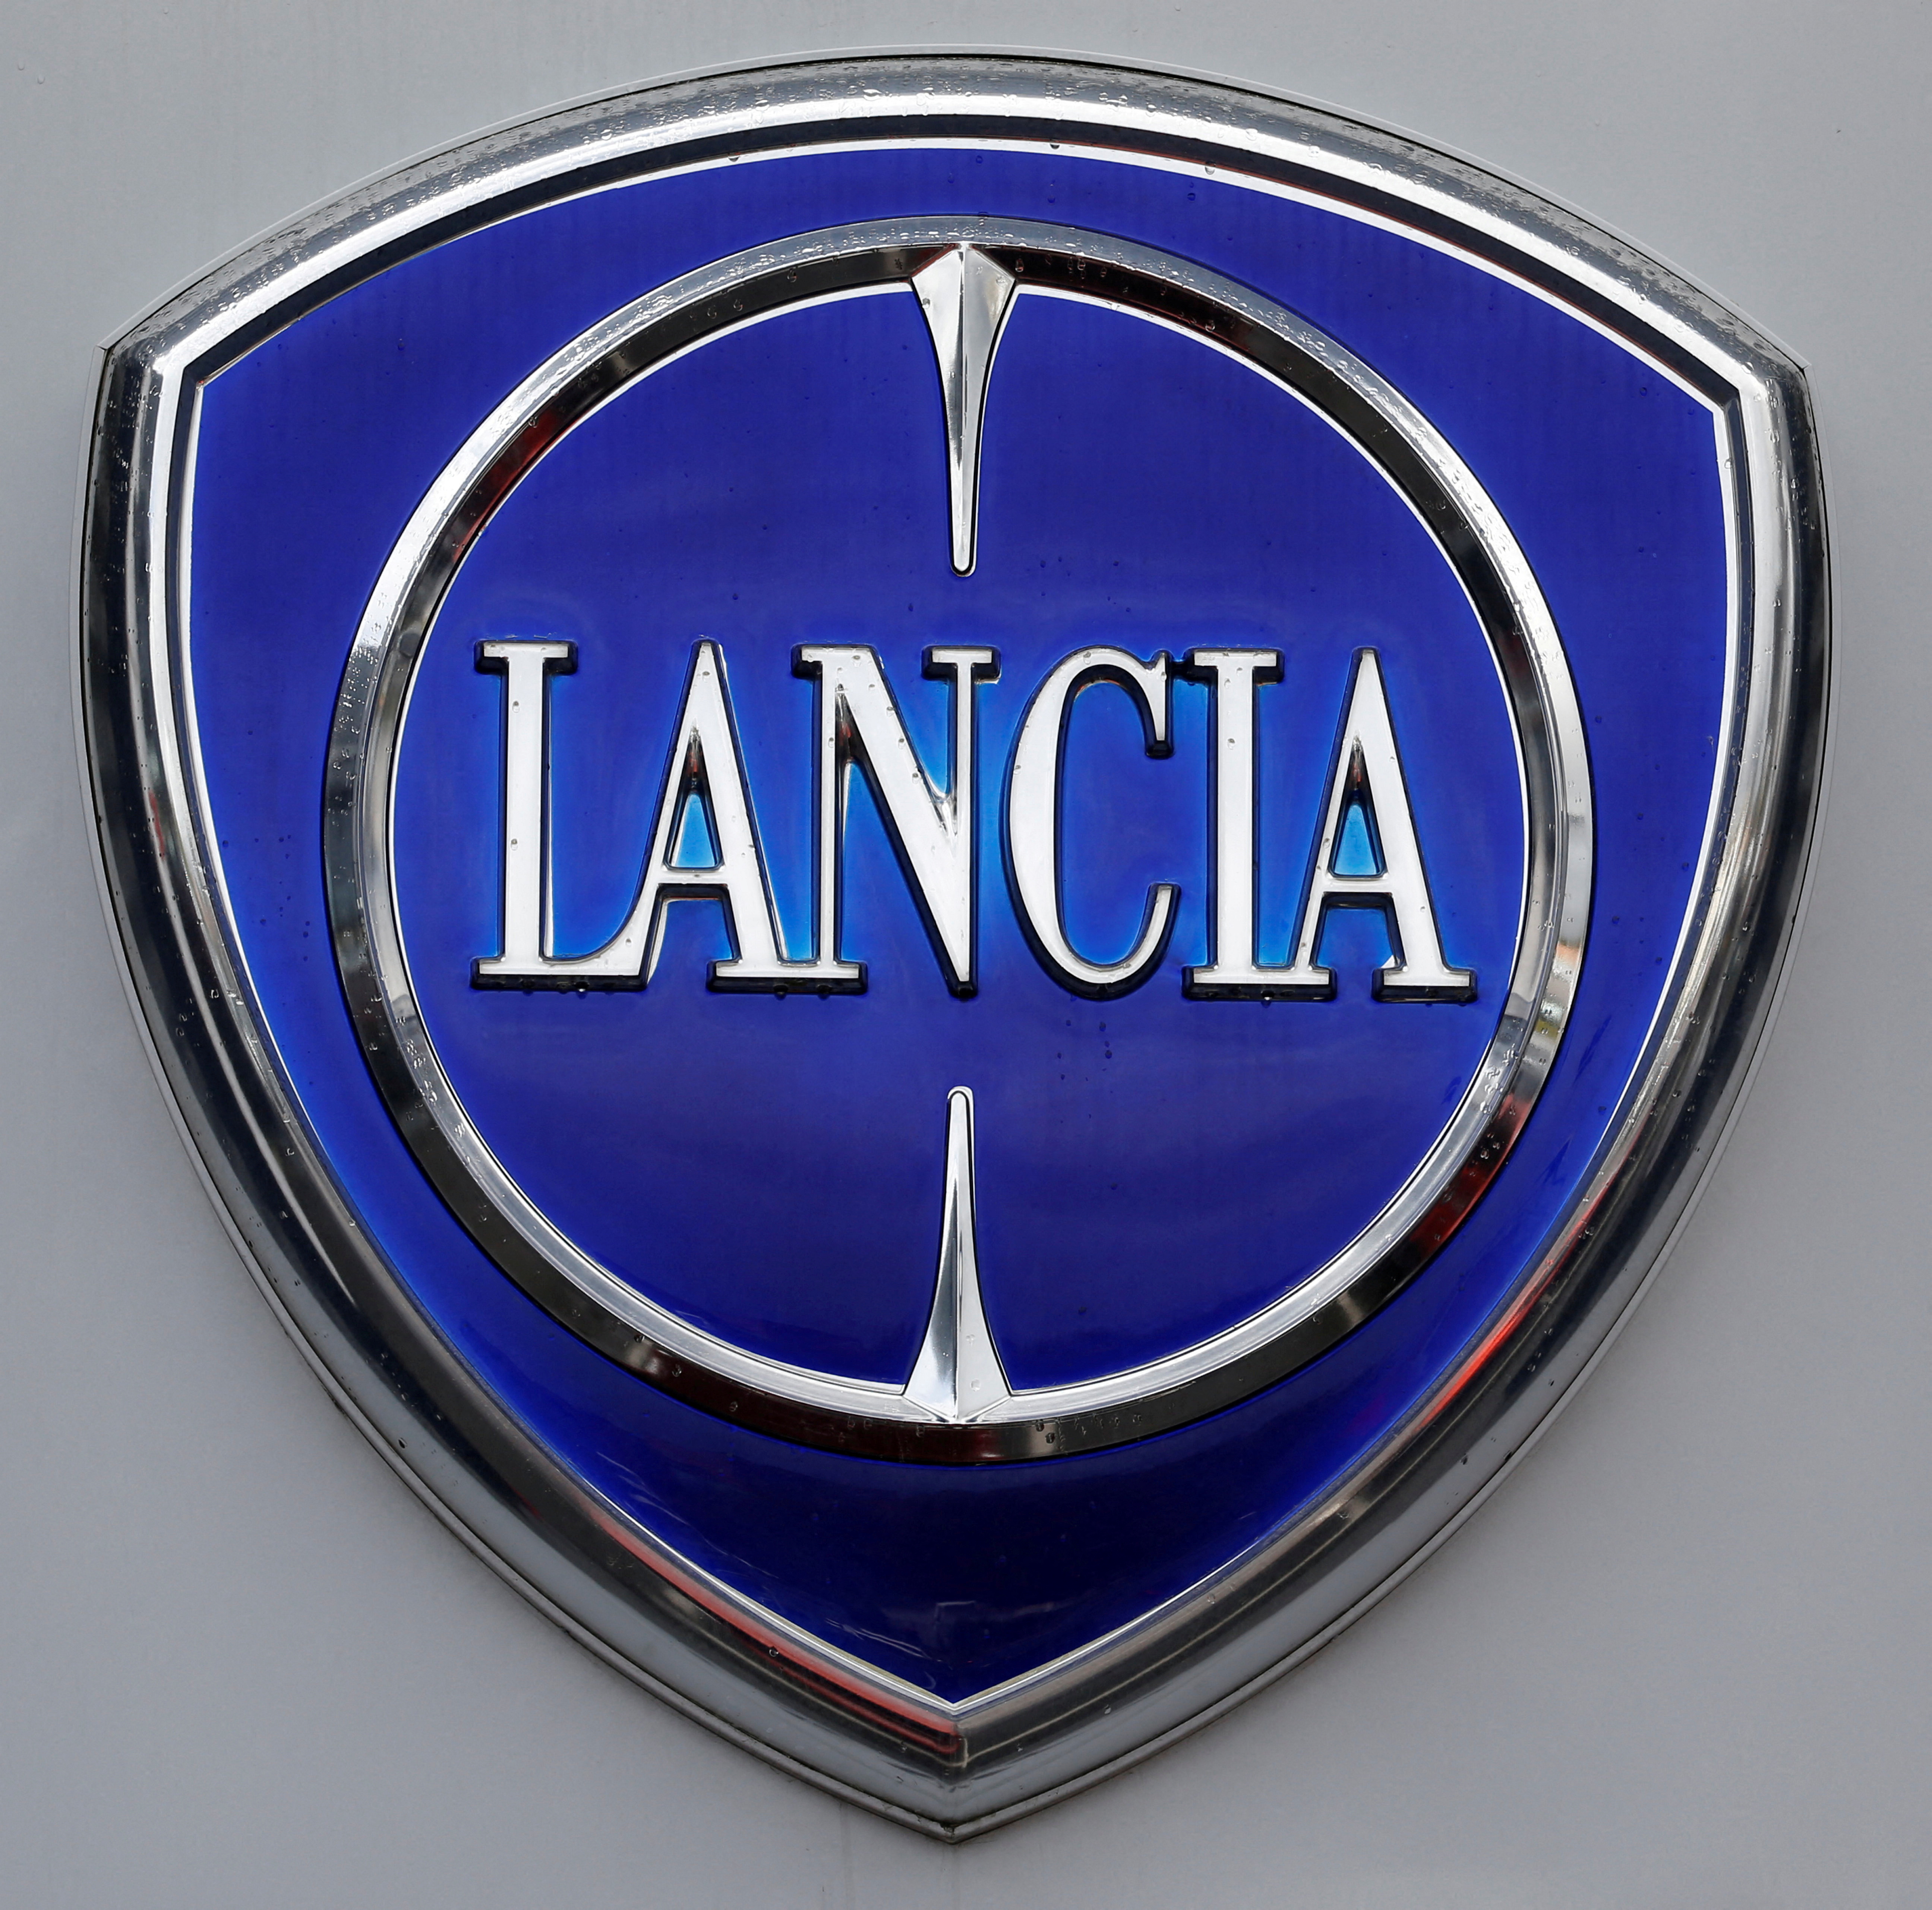 A Lancia logo is seen at a showroom of a dealership in Merignac